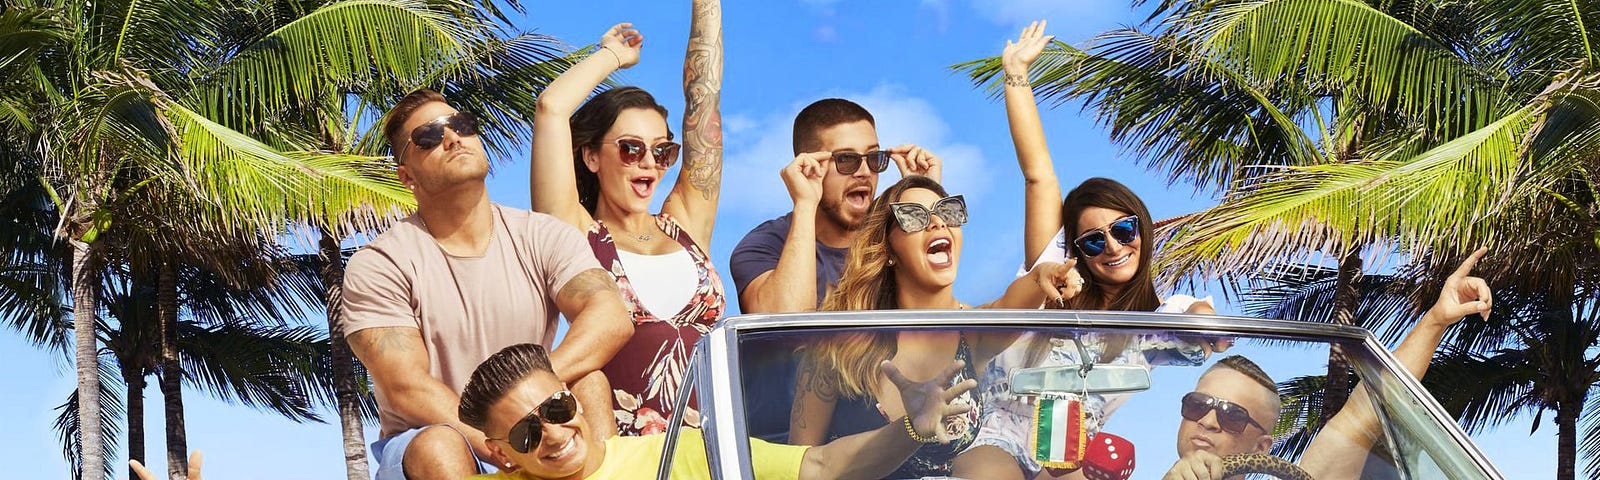 jersey shore family vacation season 3 full episodes free